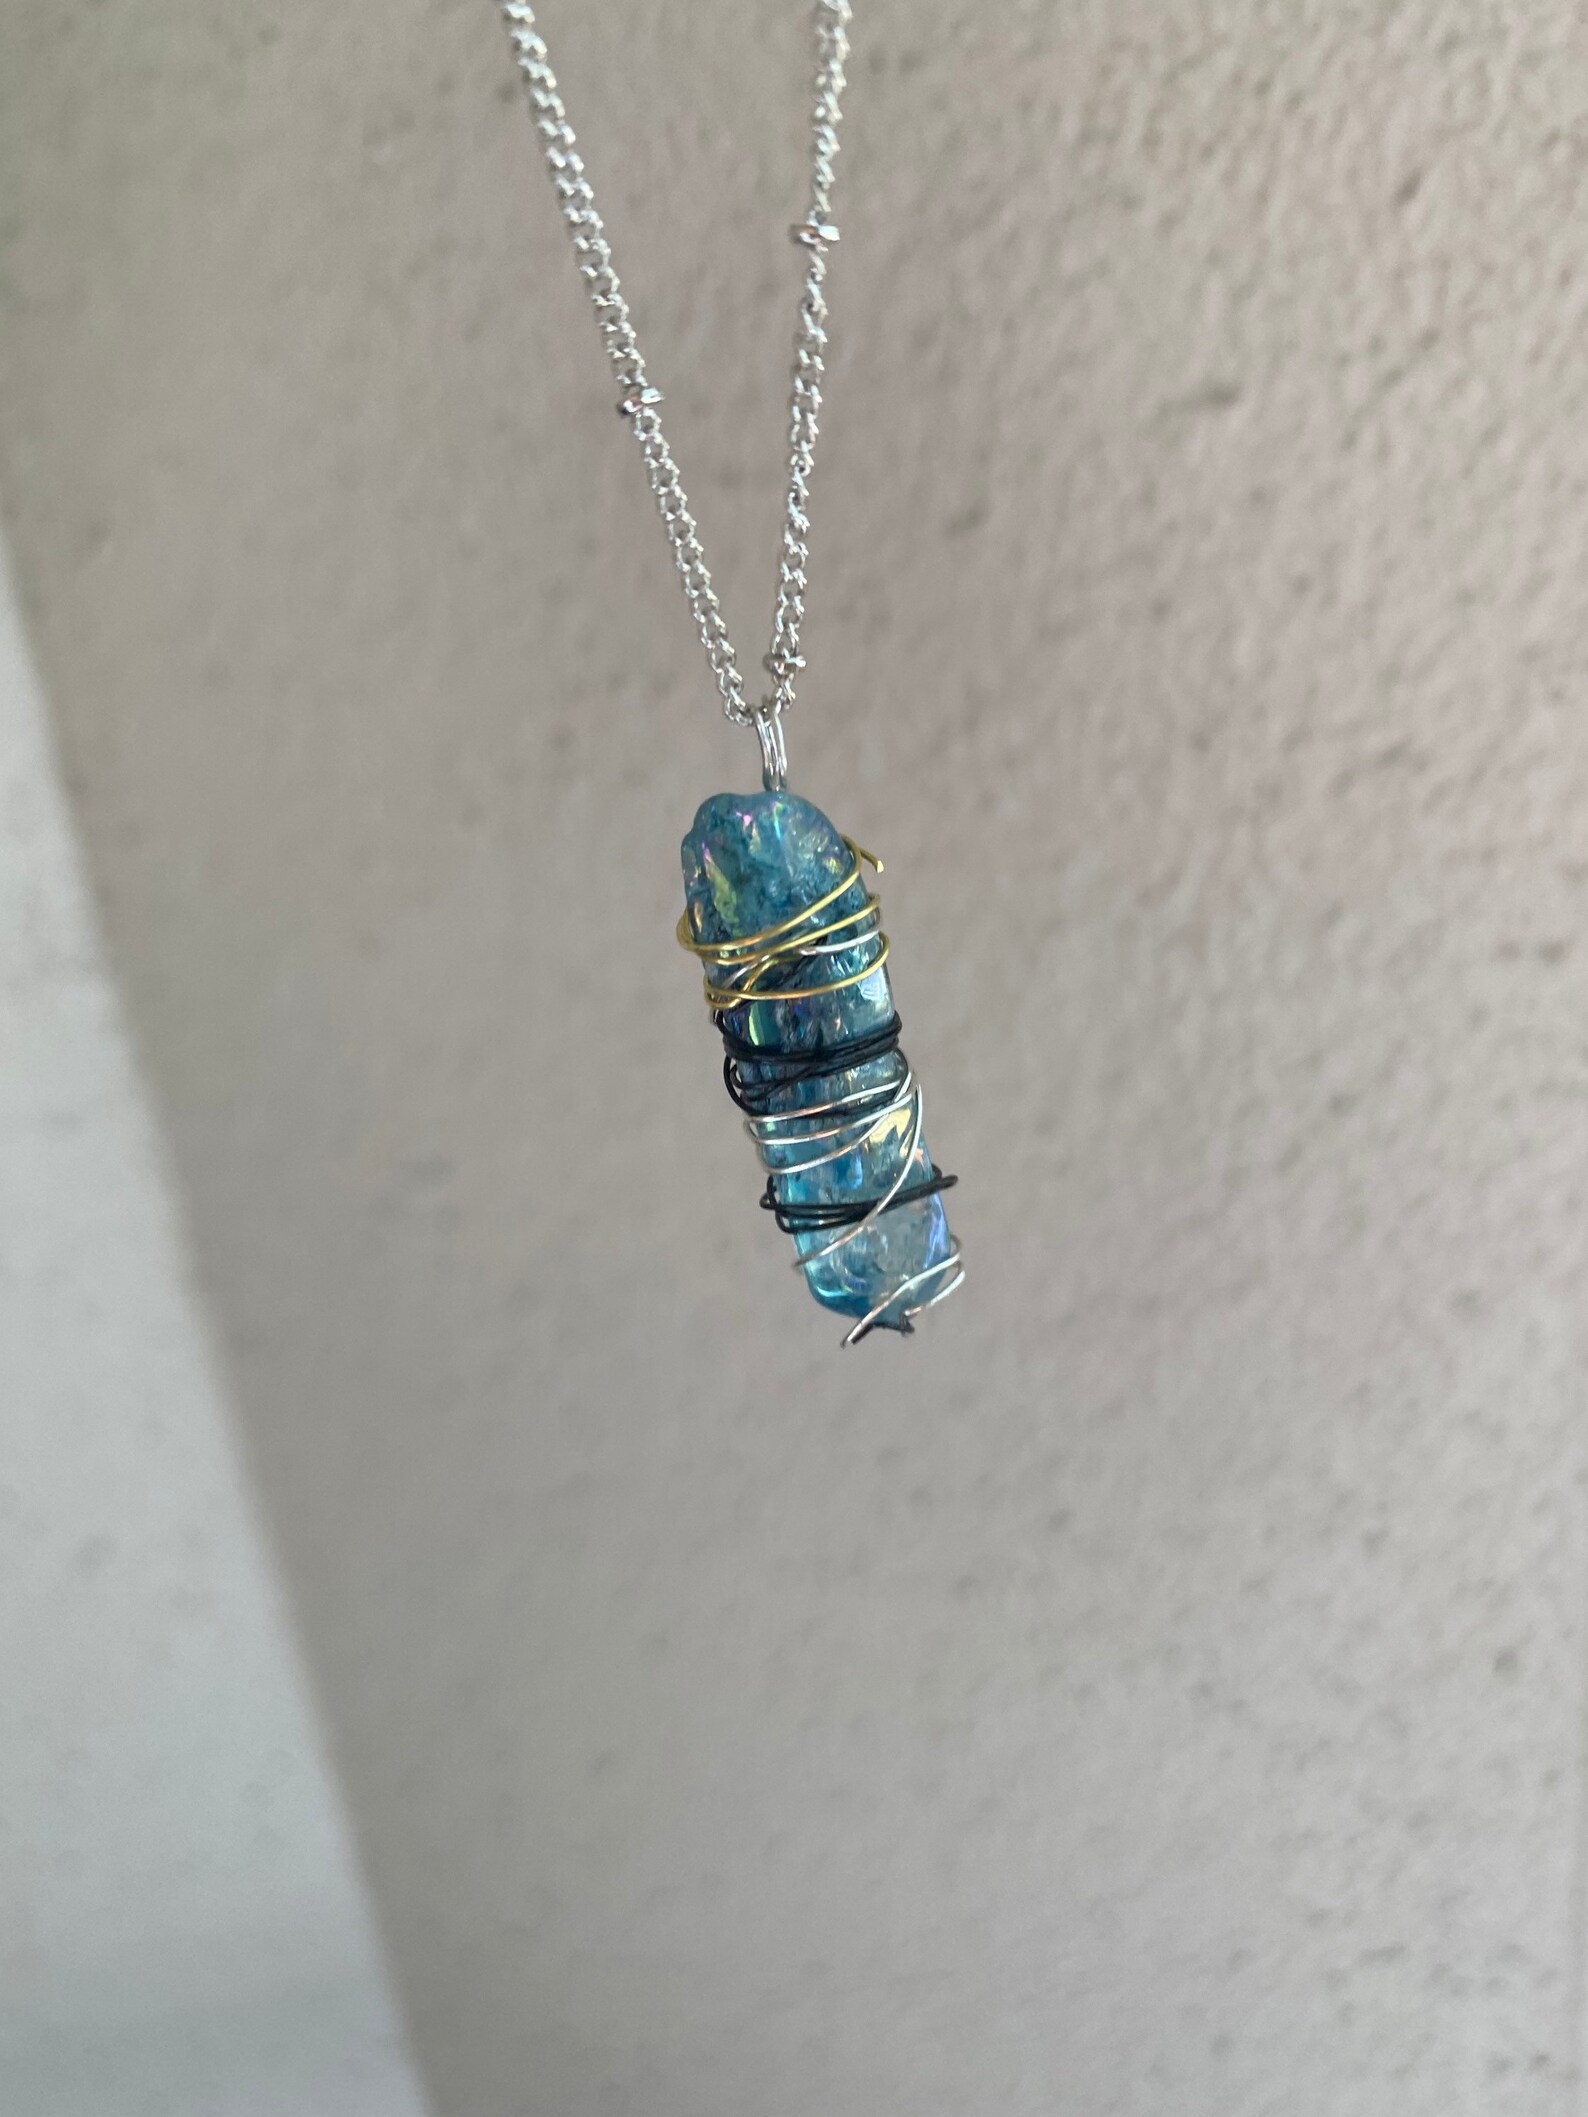 Kyber crystal lightsaber necklace | Etsy